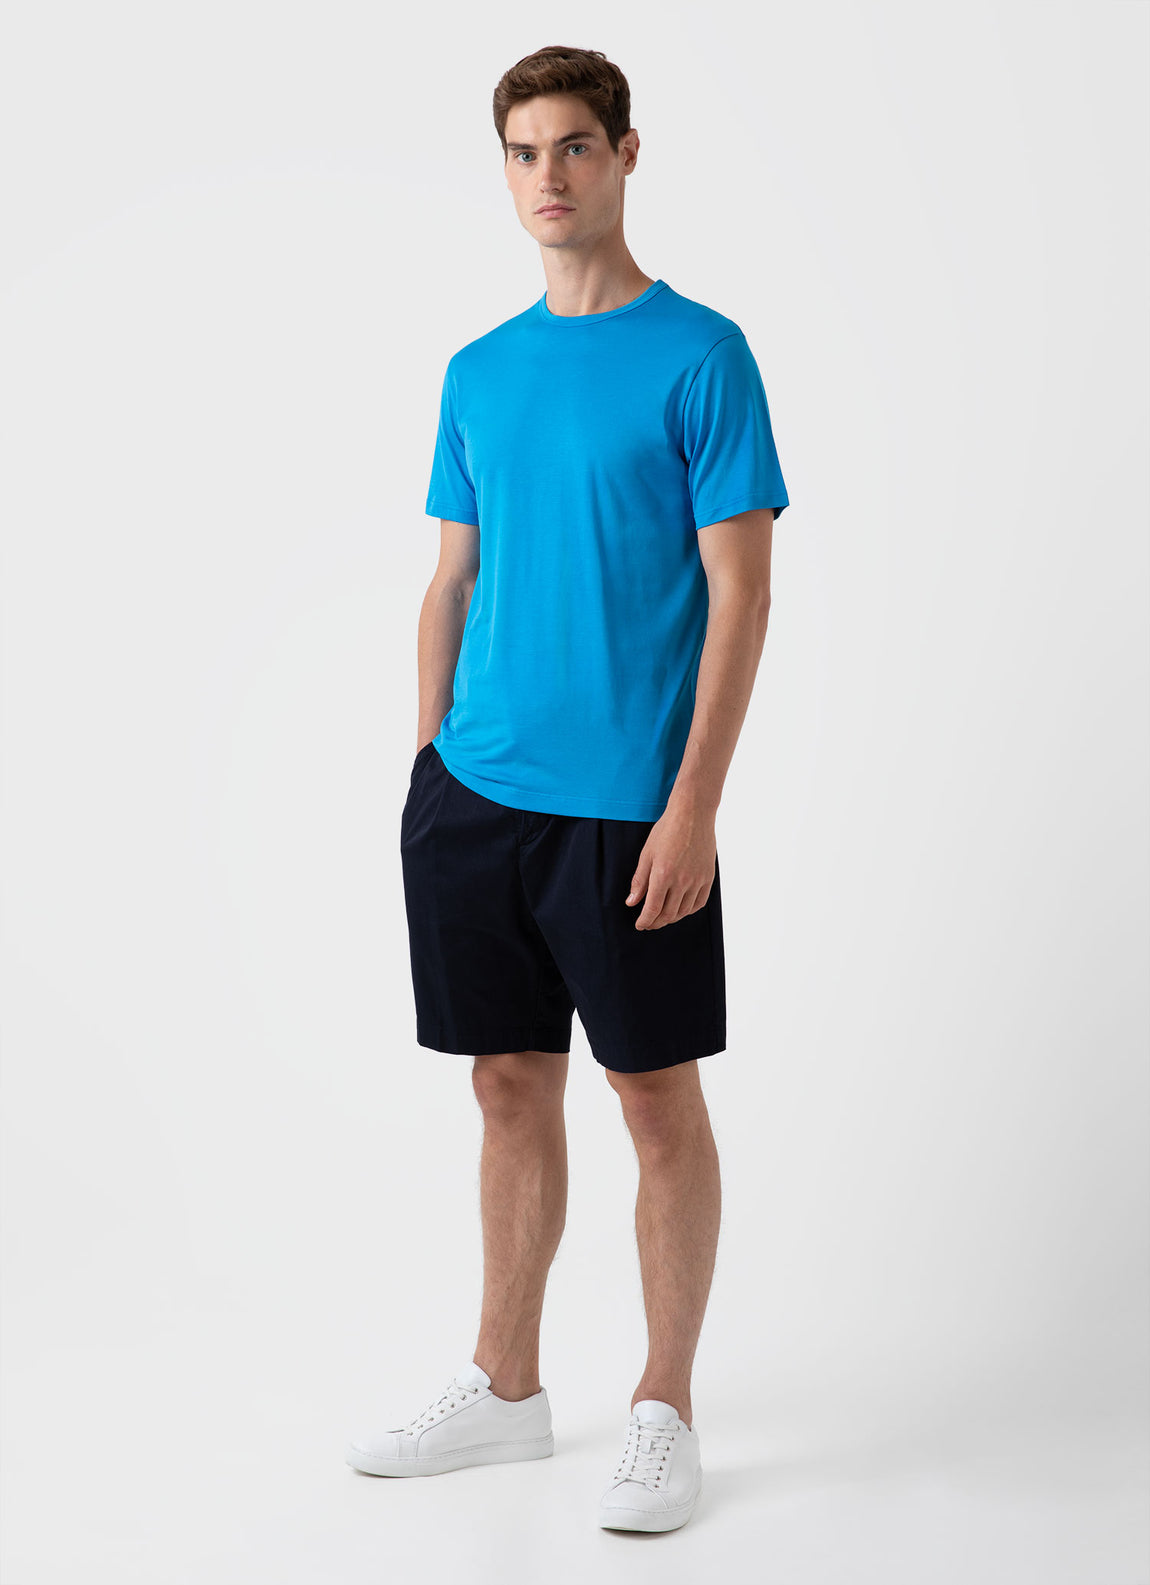 Men's Classic T-shirt in Turquoise | Sunspel